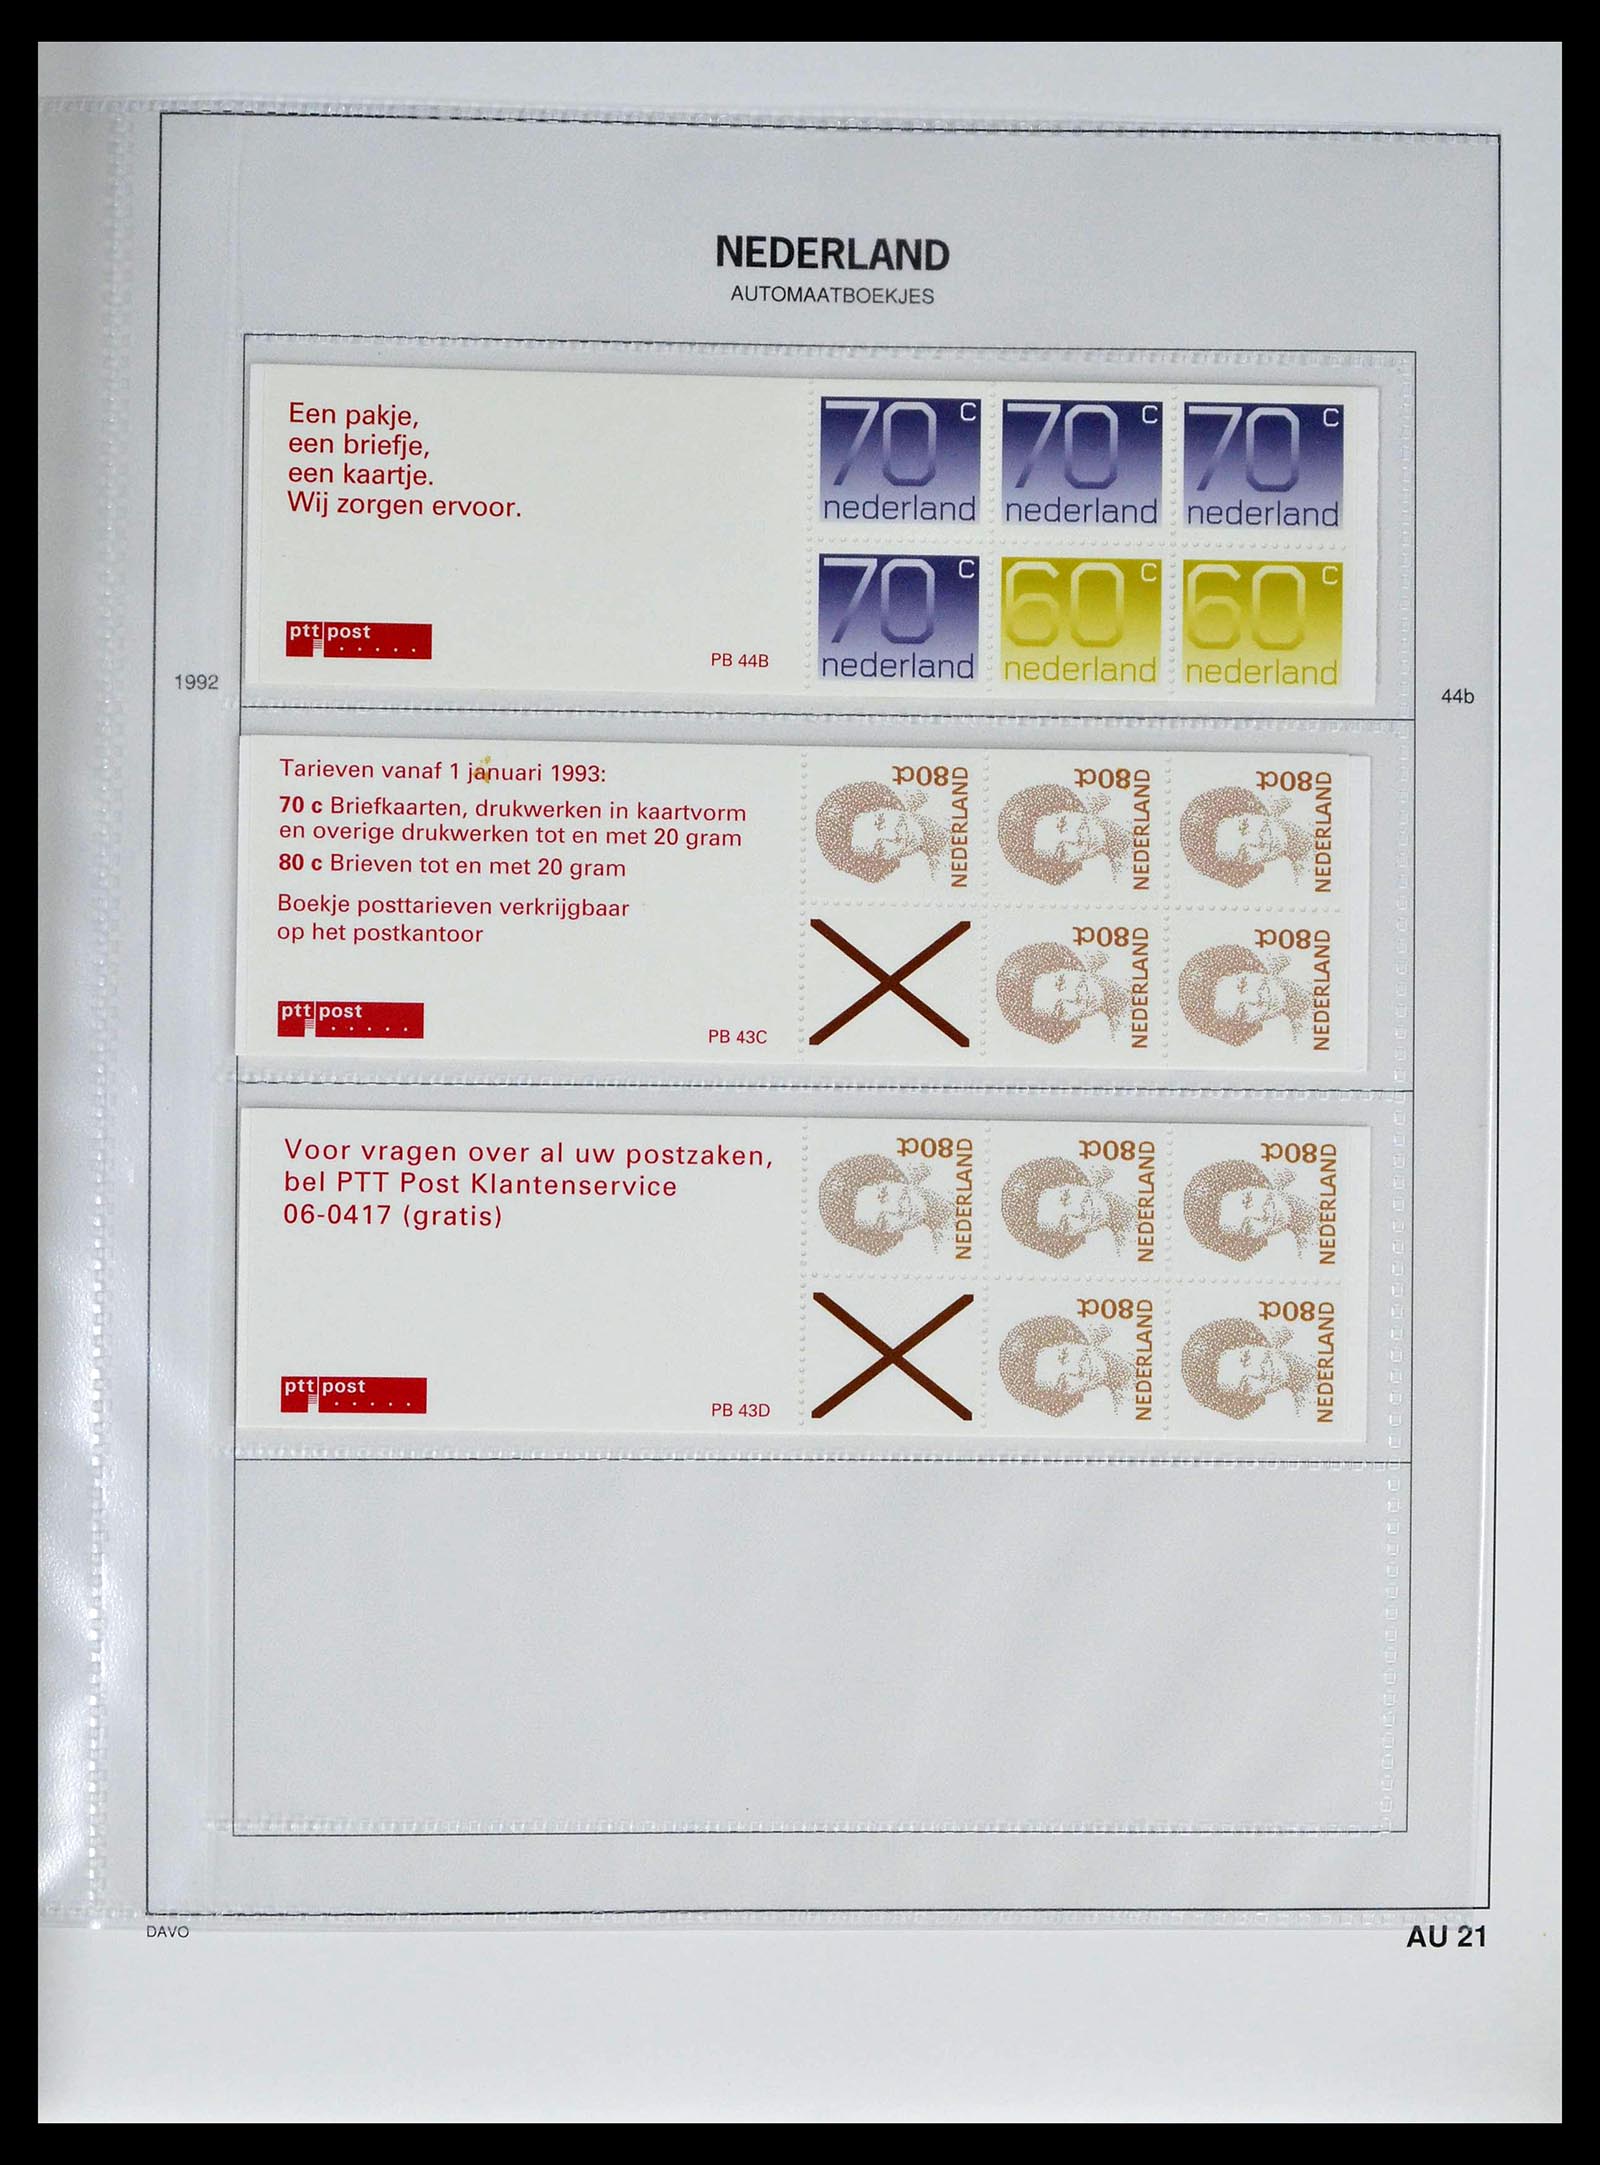 39362 0021 - Stamp collection 39362 Netherlands stamp booklets 1964-2003.